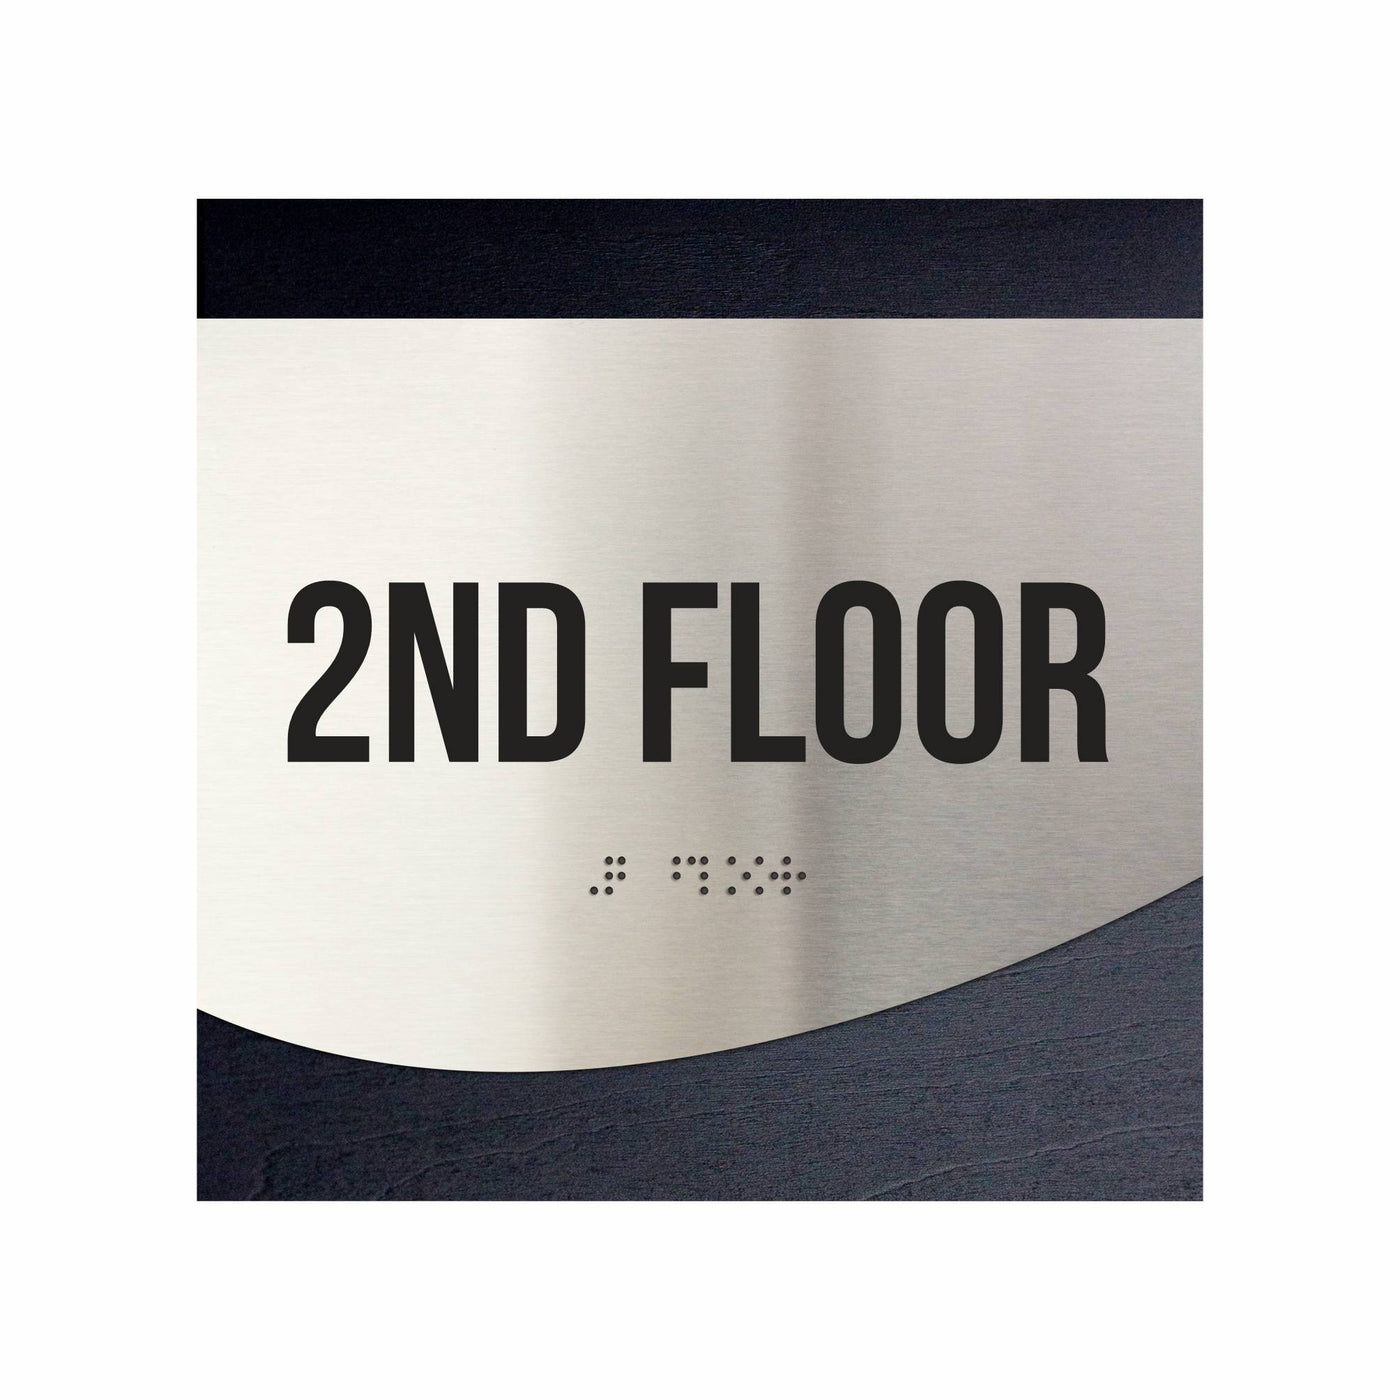 Floor Signs - Sign For 2nd Floor - Stainless Steel & Wood  - "Jure" Design